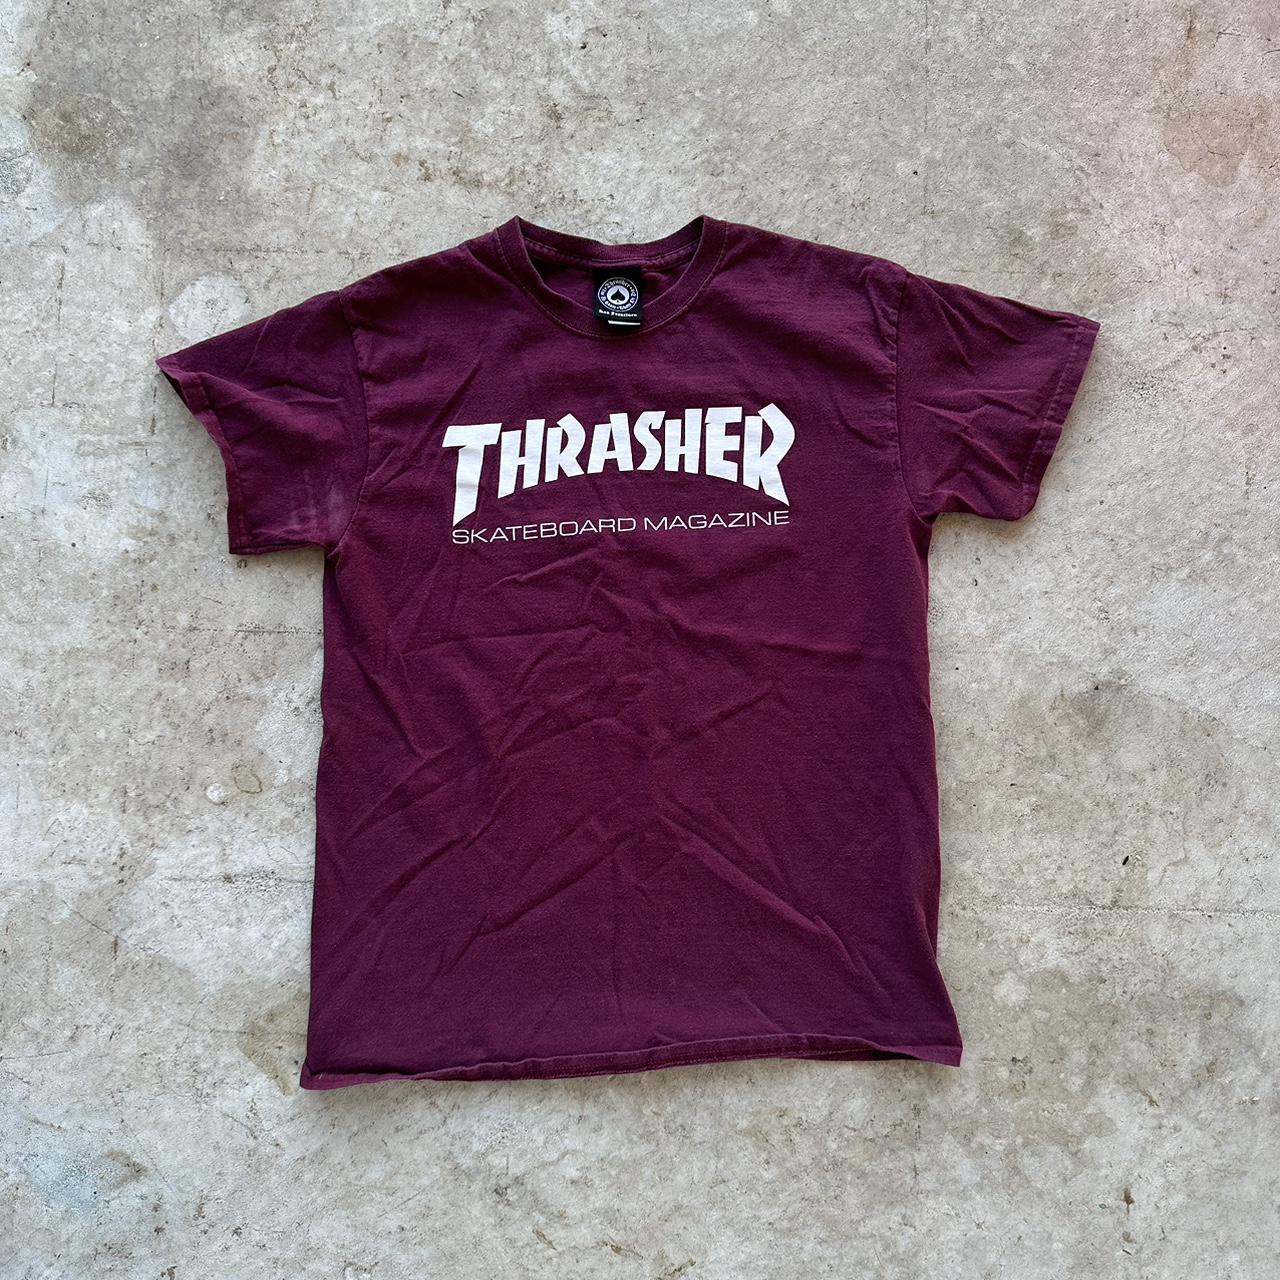 Thrasher skate shirt Size medium No rips stains or... - Depop